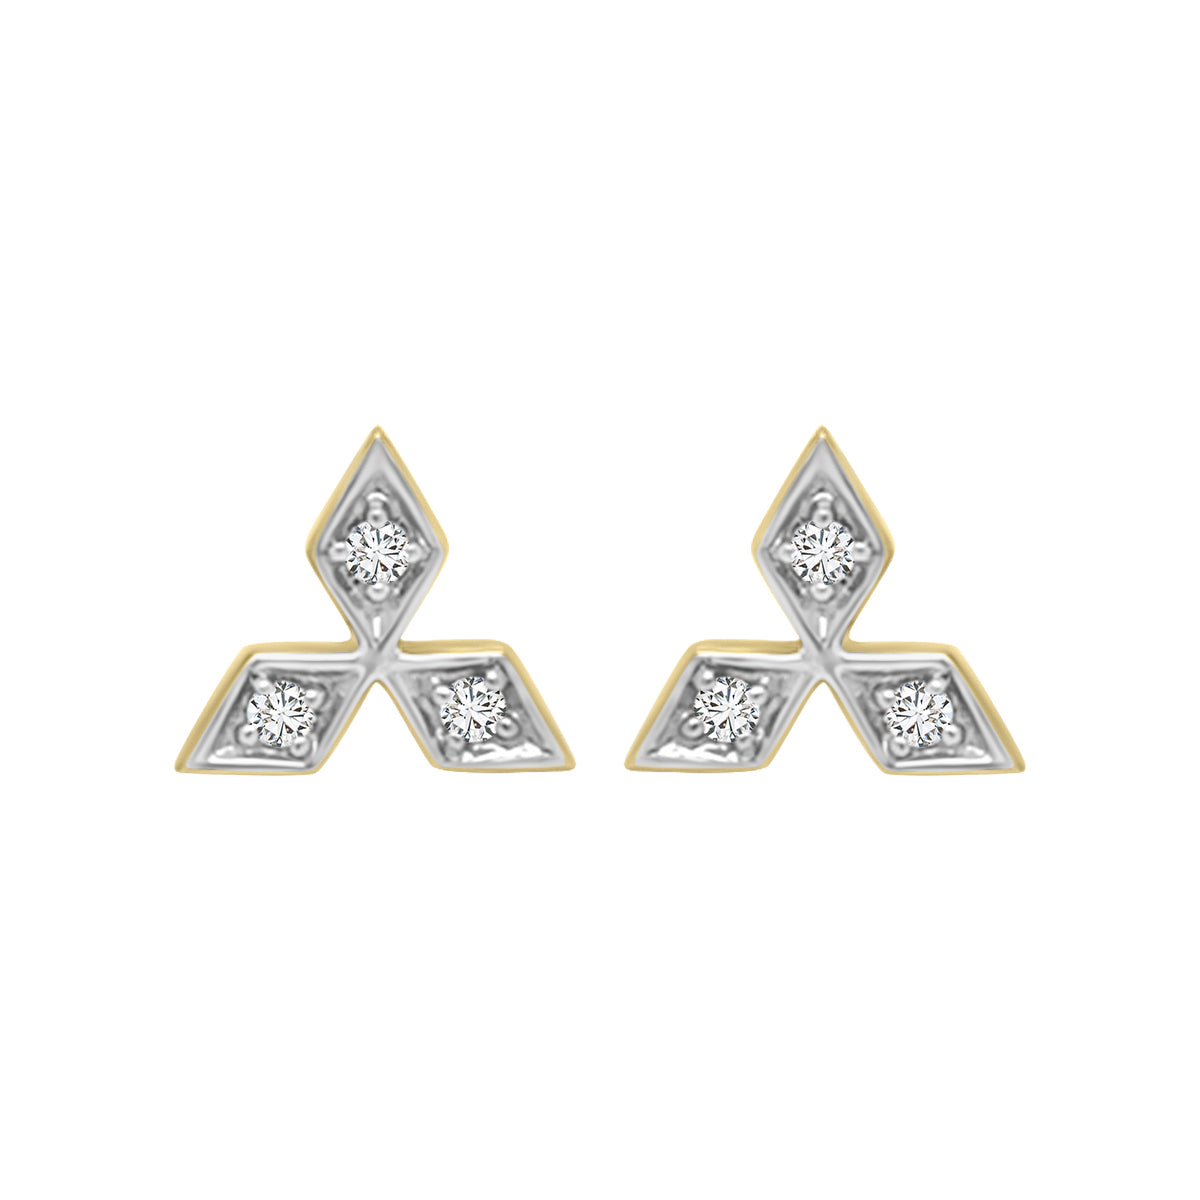 Minimalist Three Diamond Earrings In 18k Yellow Gold.